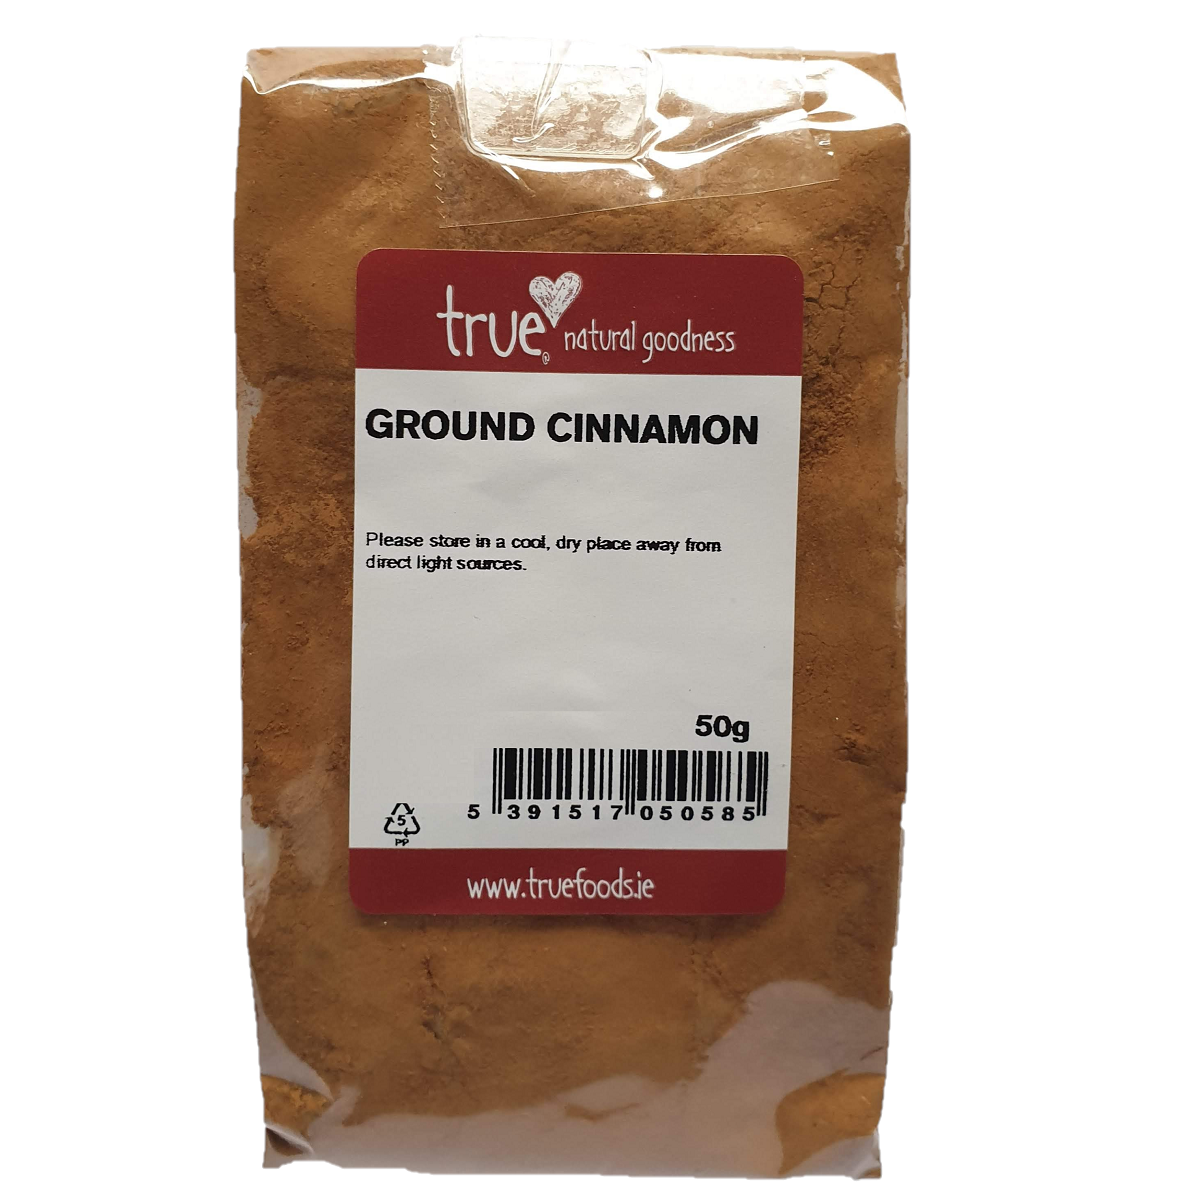 True Natural Goodness Ground Cinnamon 50g